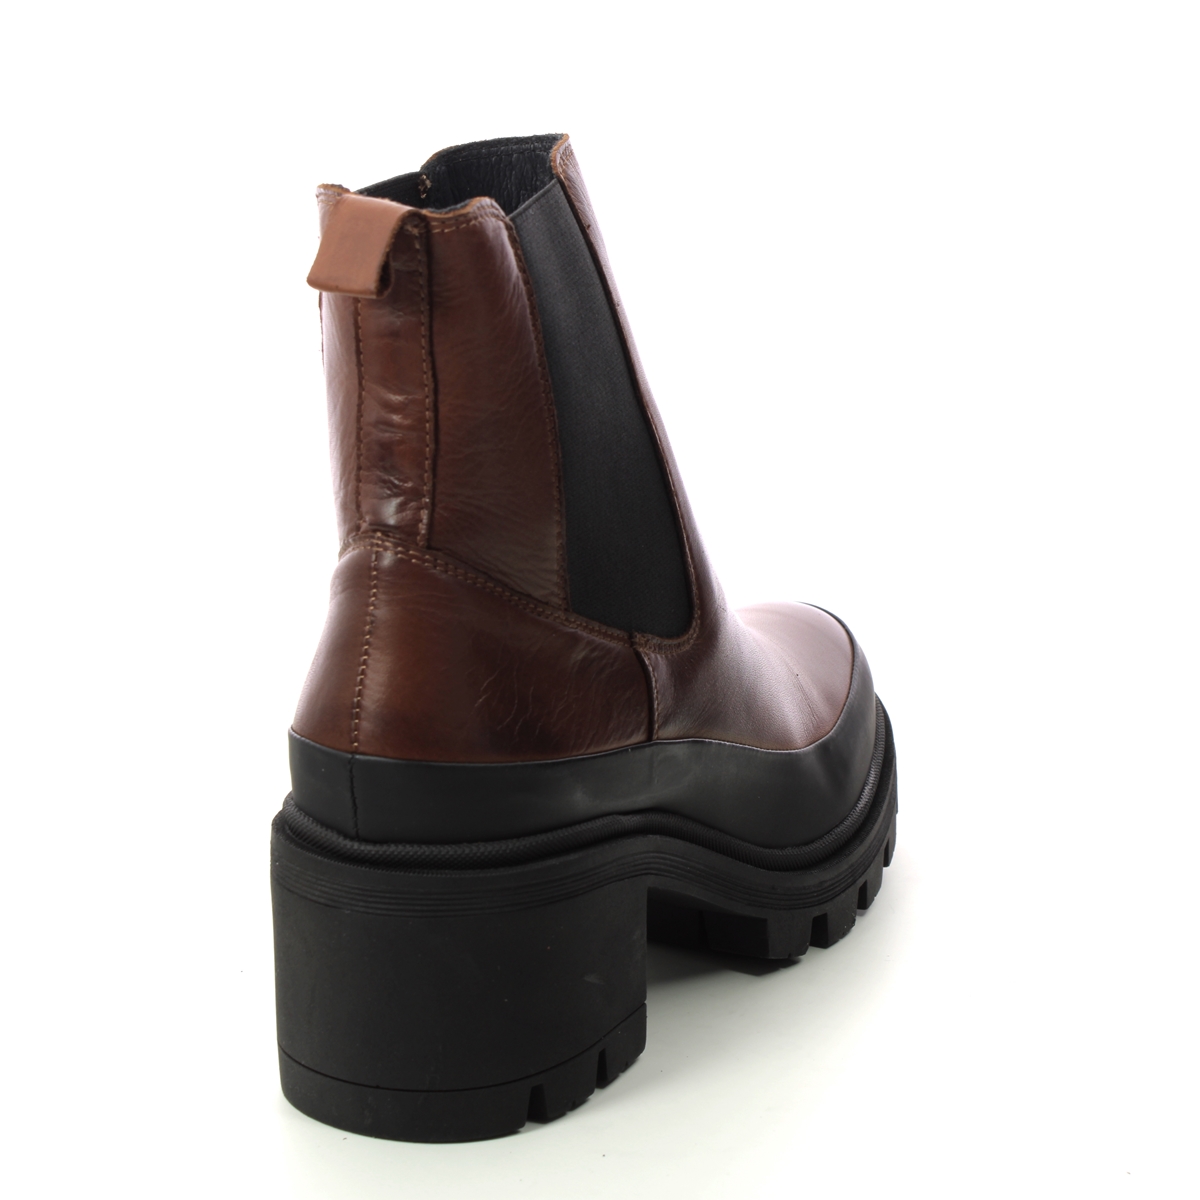 Creator Bruna Chelsea Tan Leather Womens Chelsea Boots IB21608-11